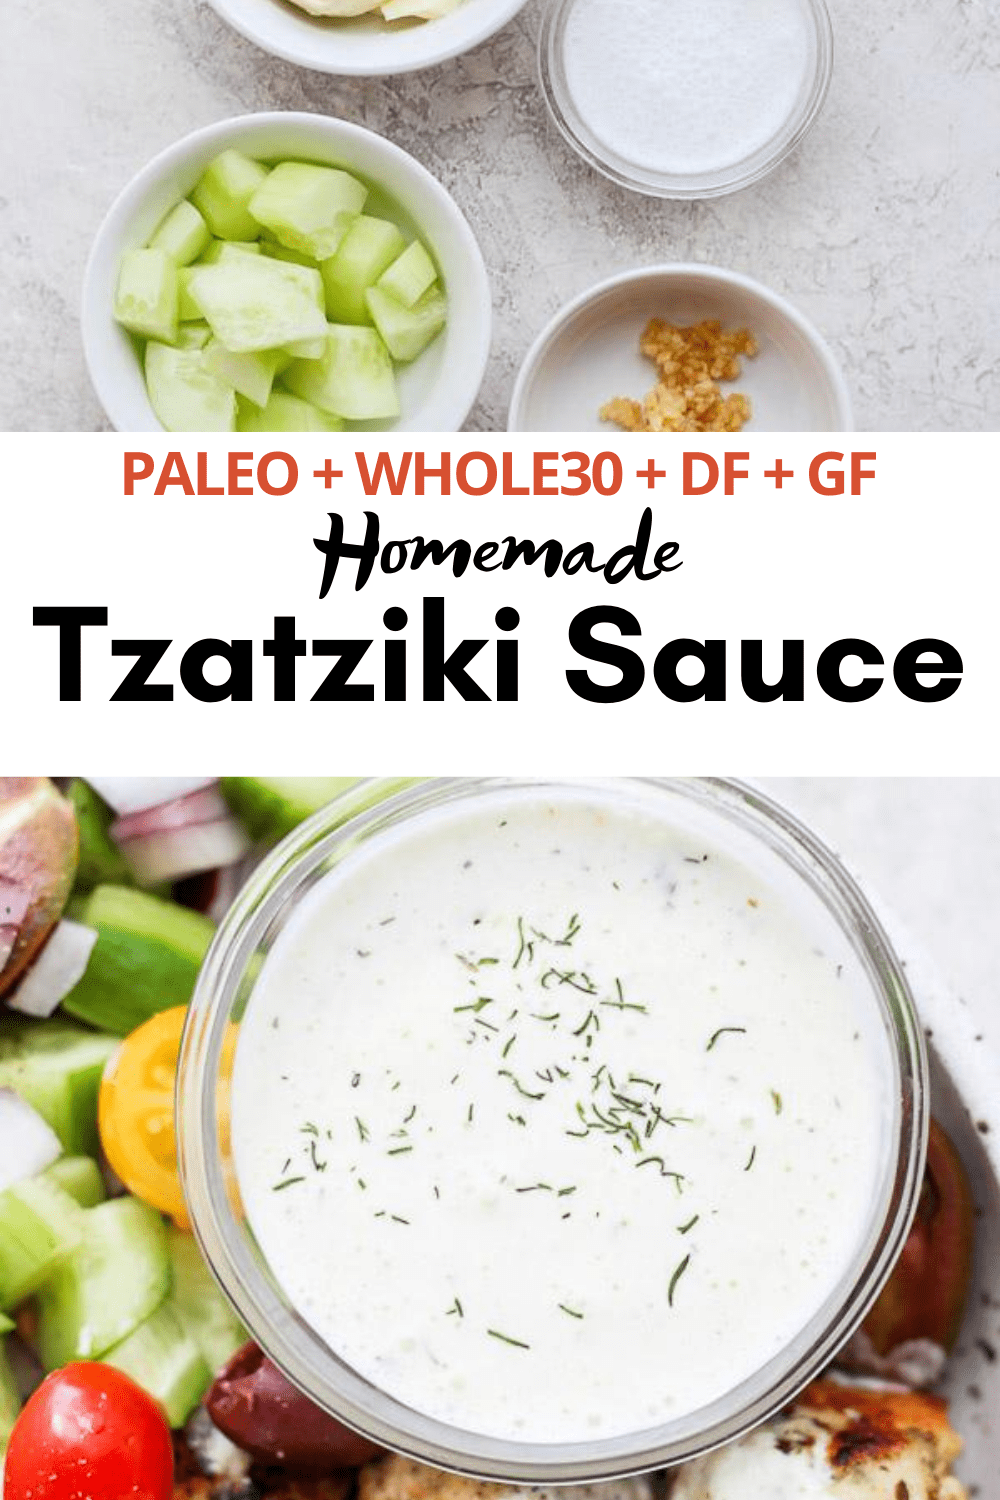 How to Make Tzatziki Sauce